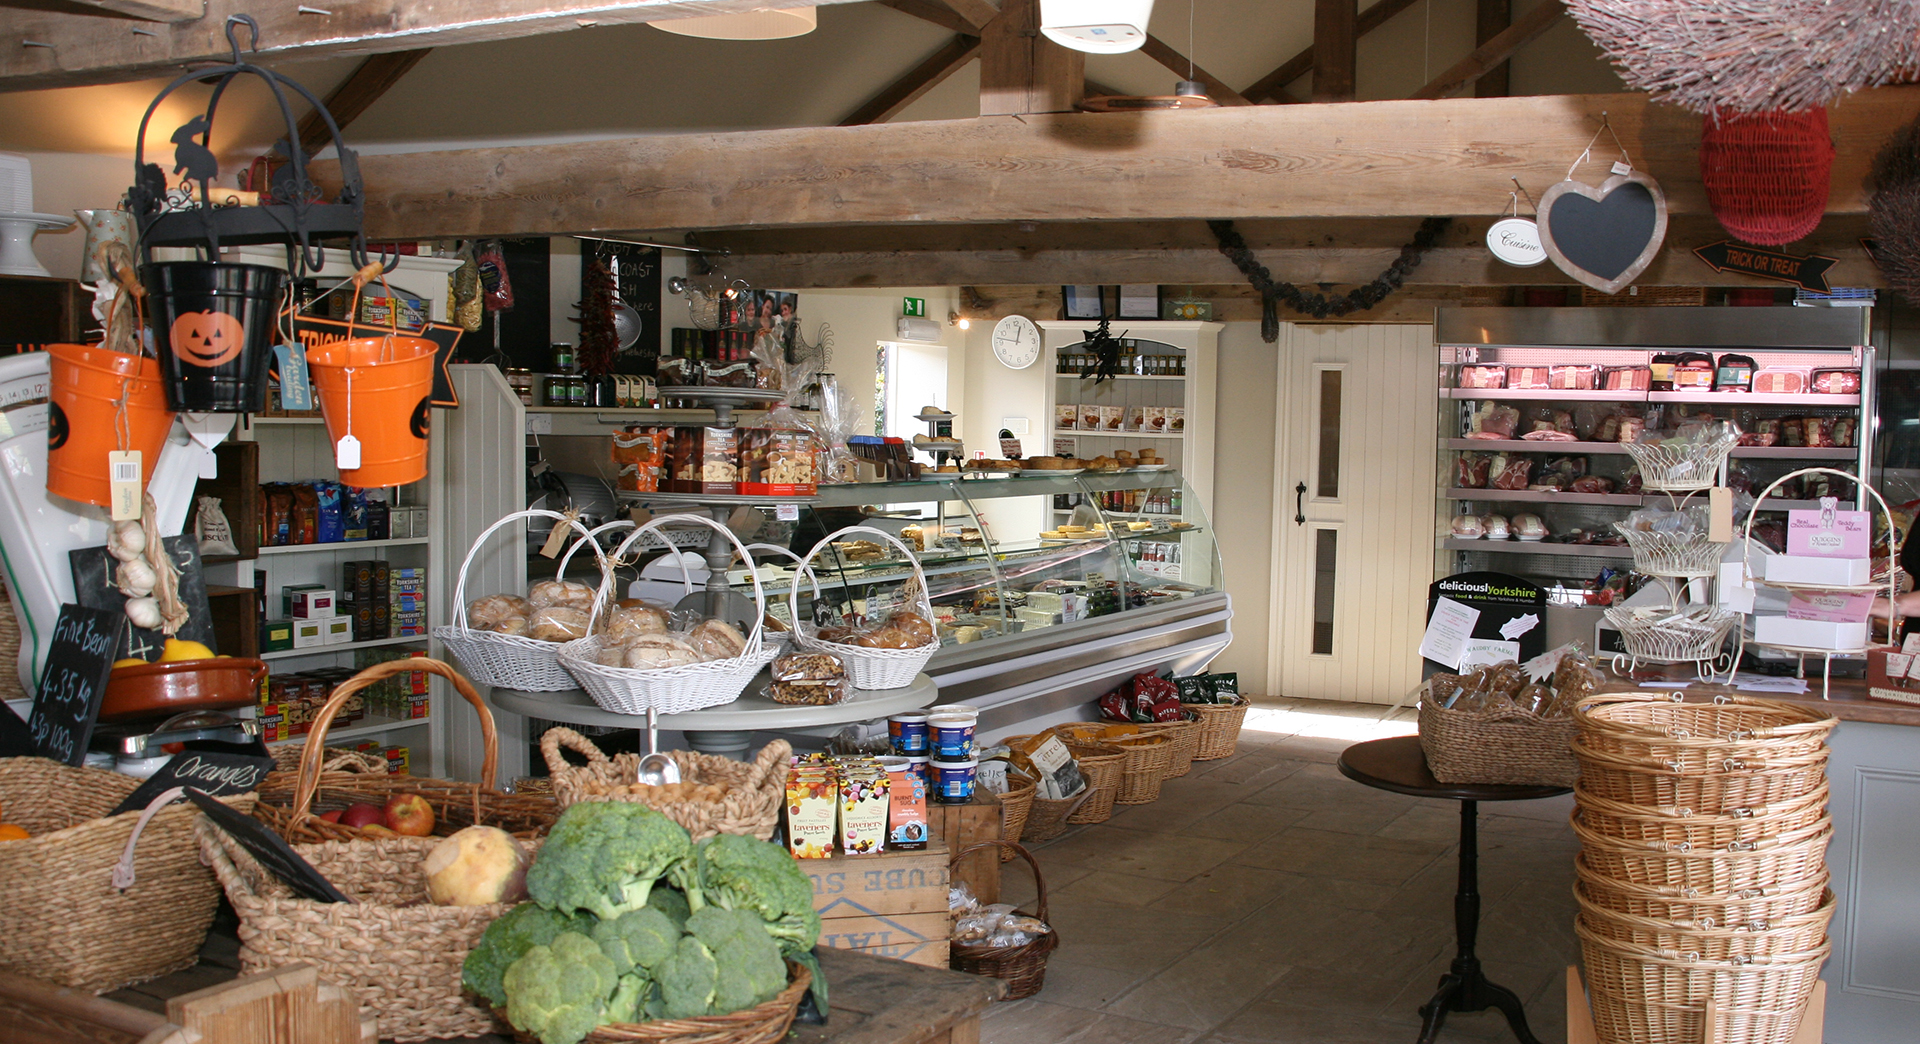 Farm shop interior